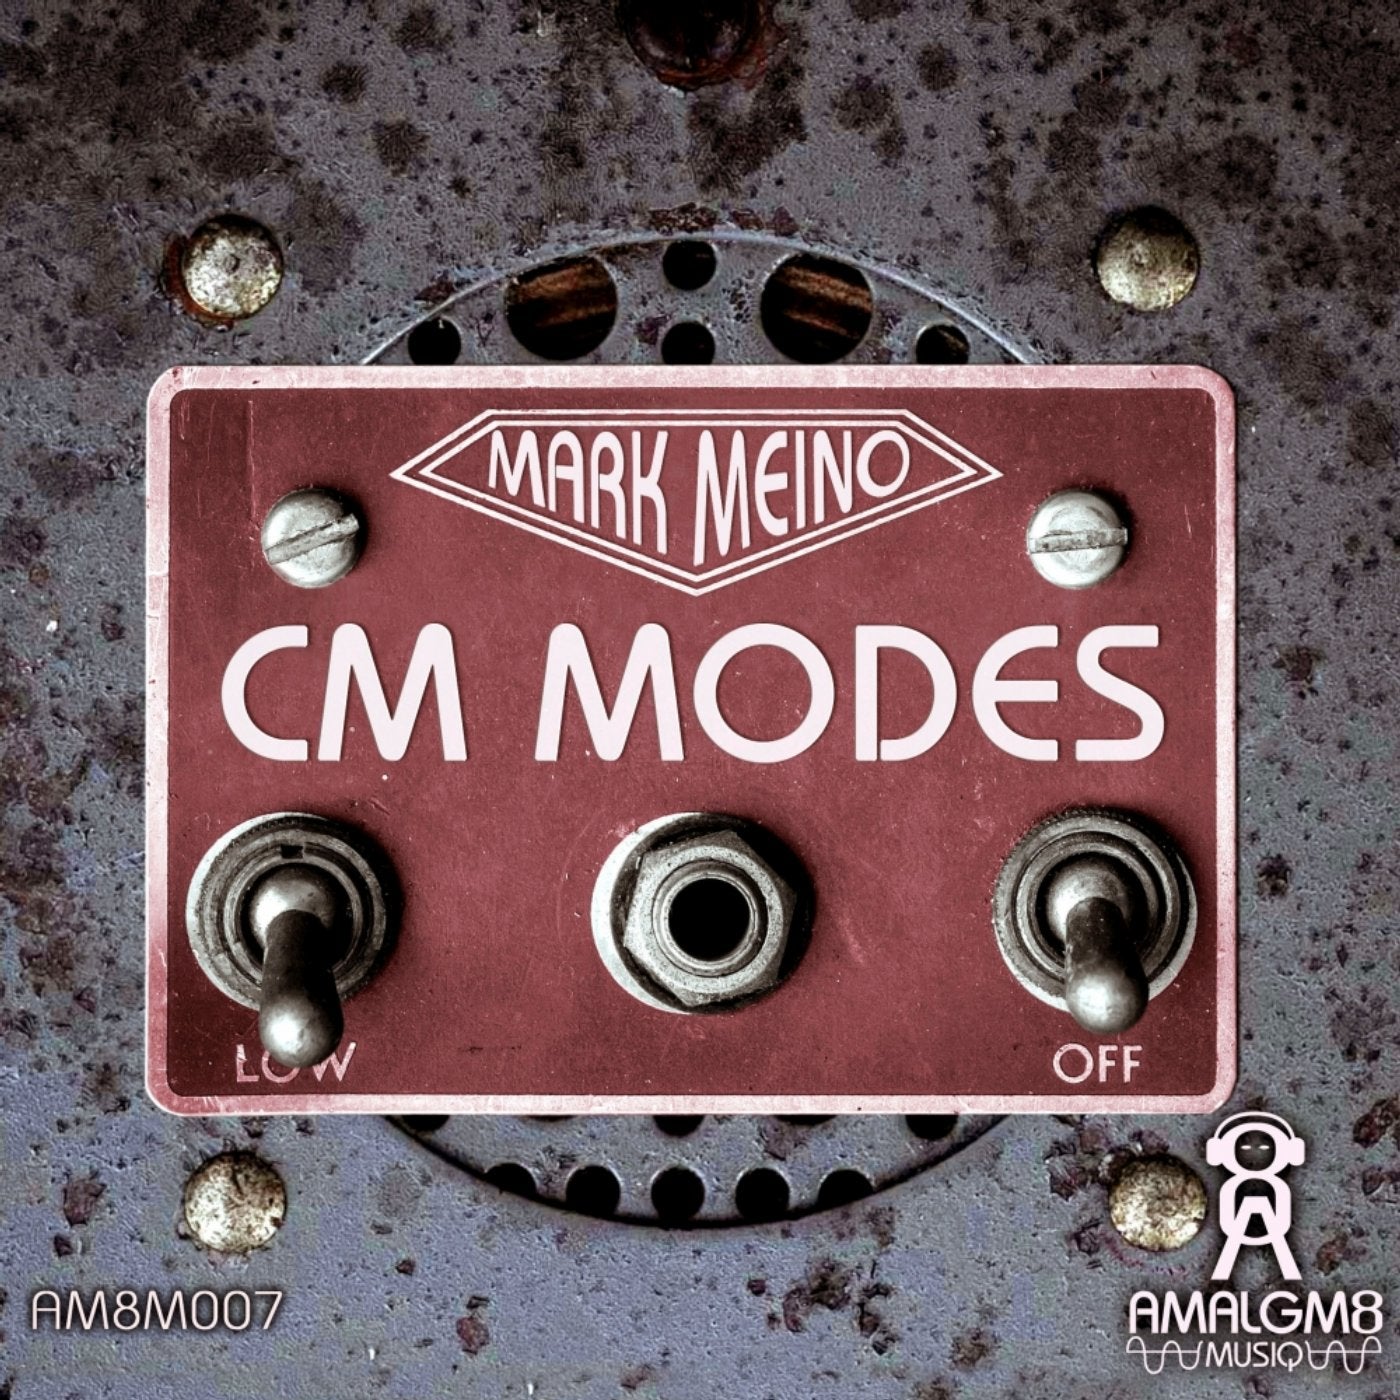 Cm Modes